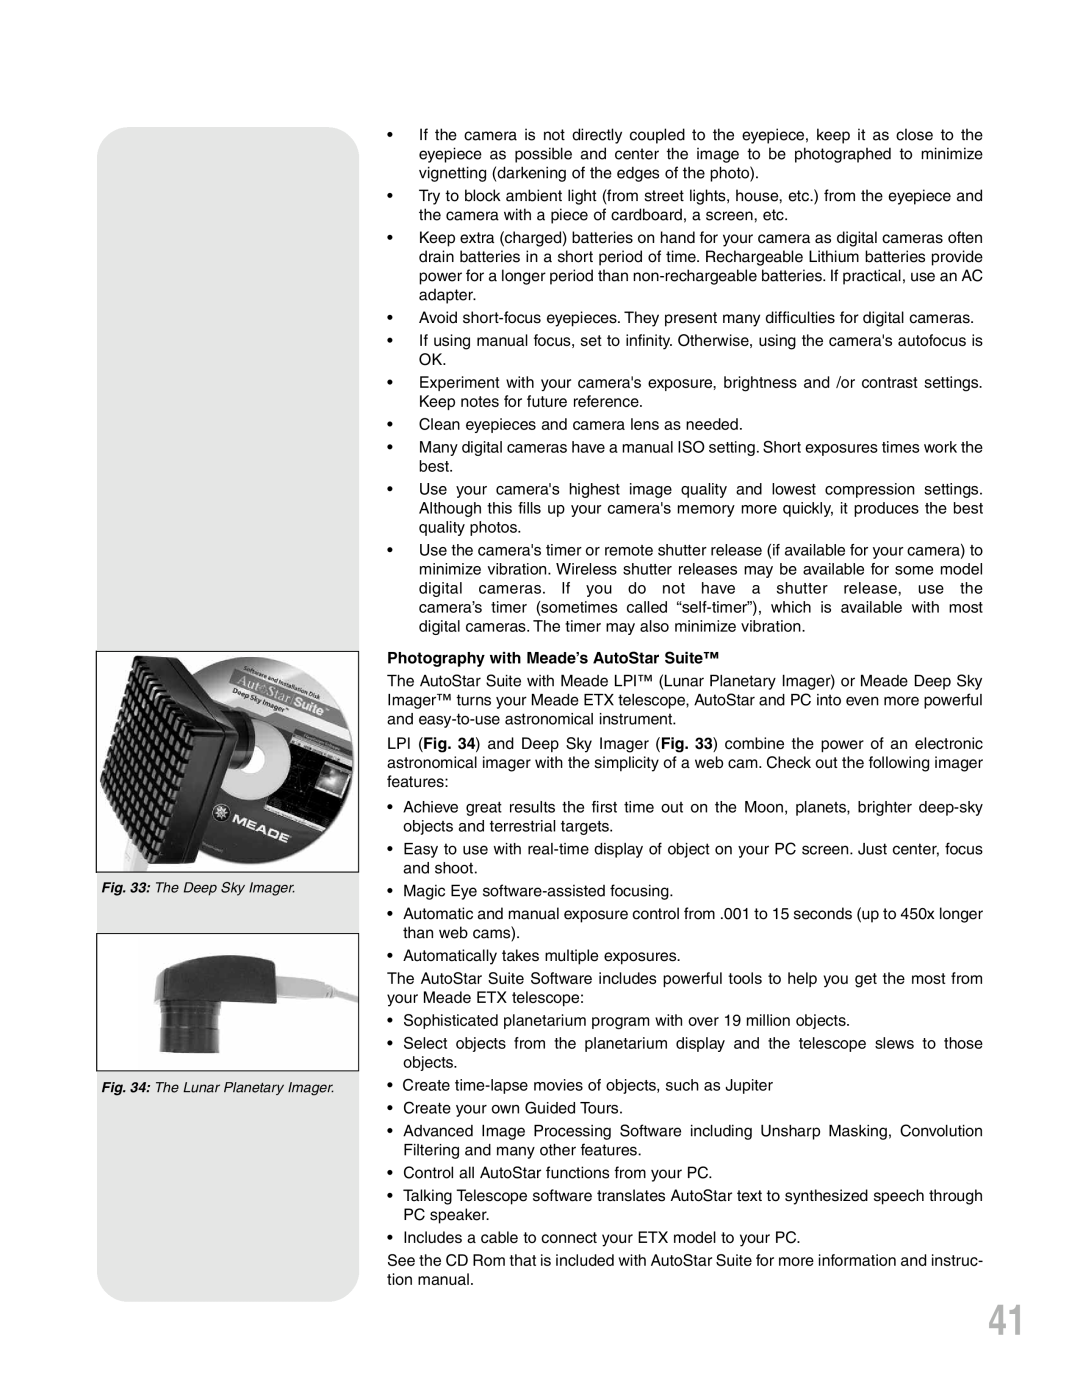 Meade ETX-90PE instruction manual Photography with Meade’s AutoStar Suite 